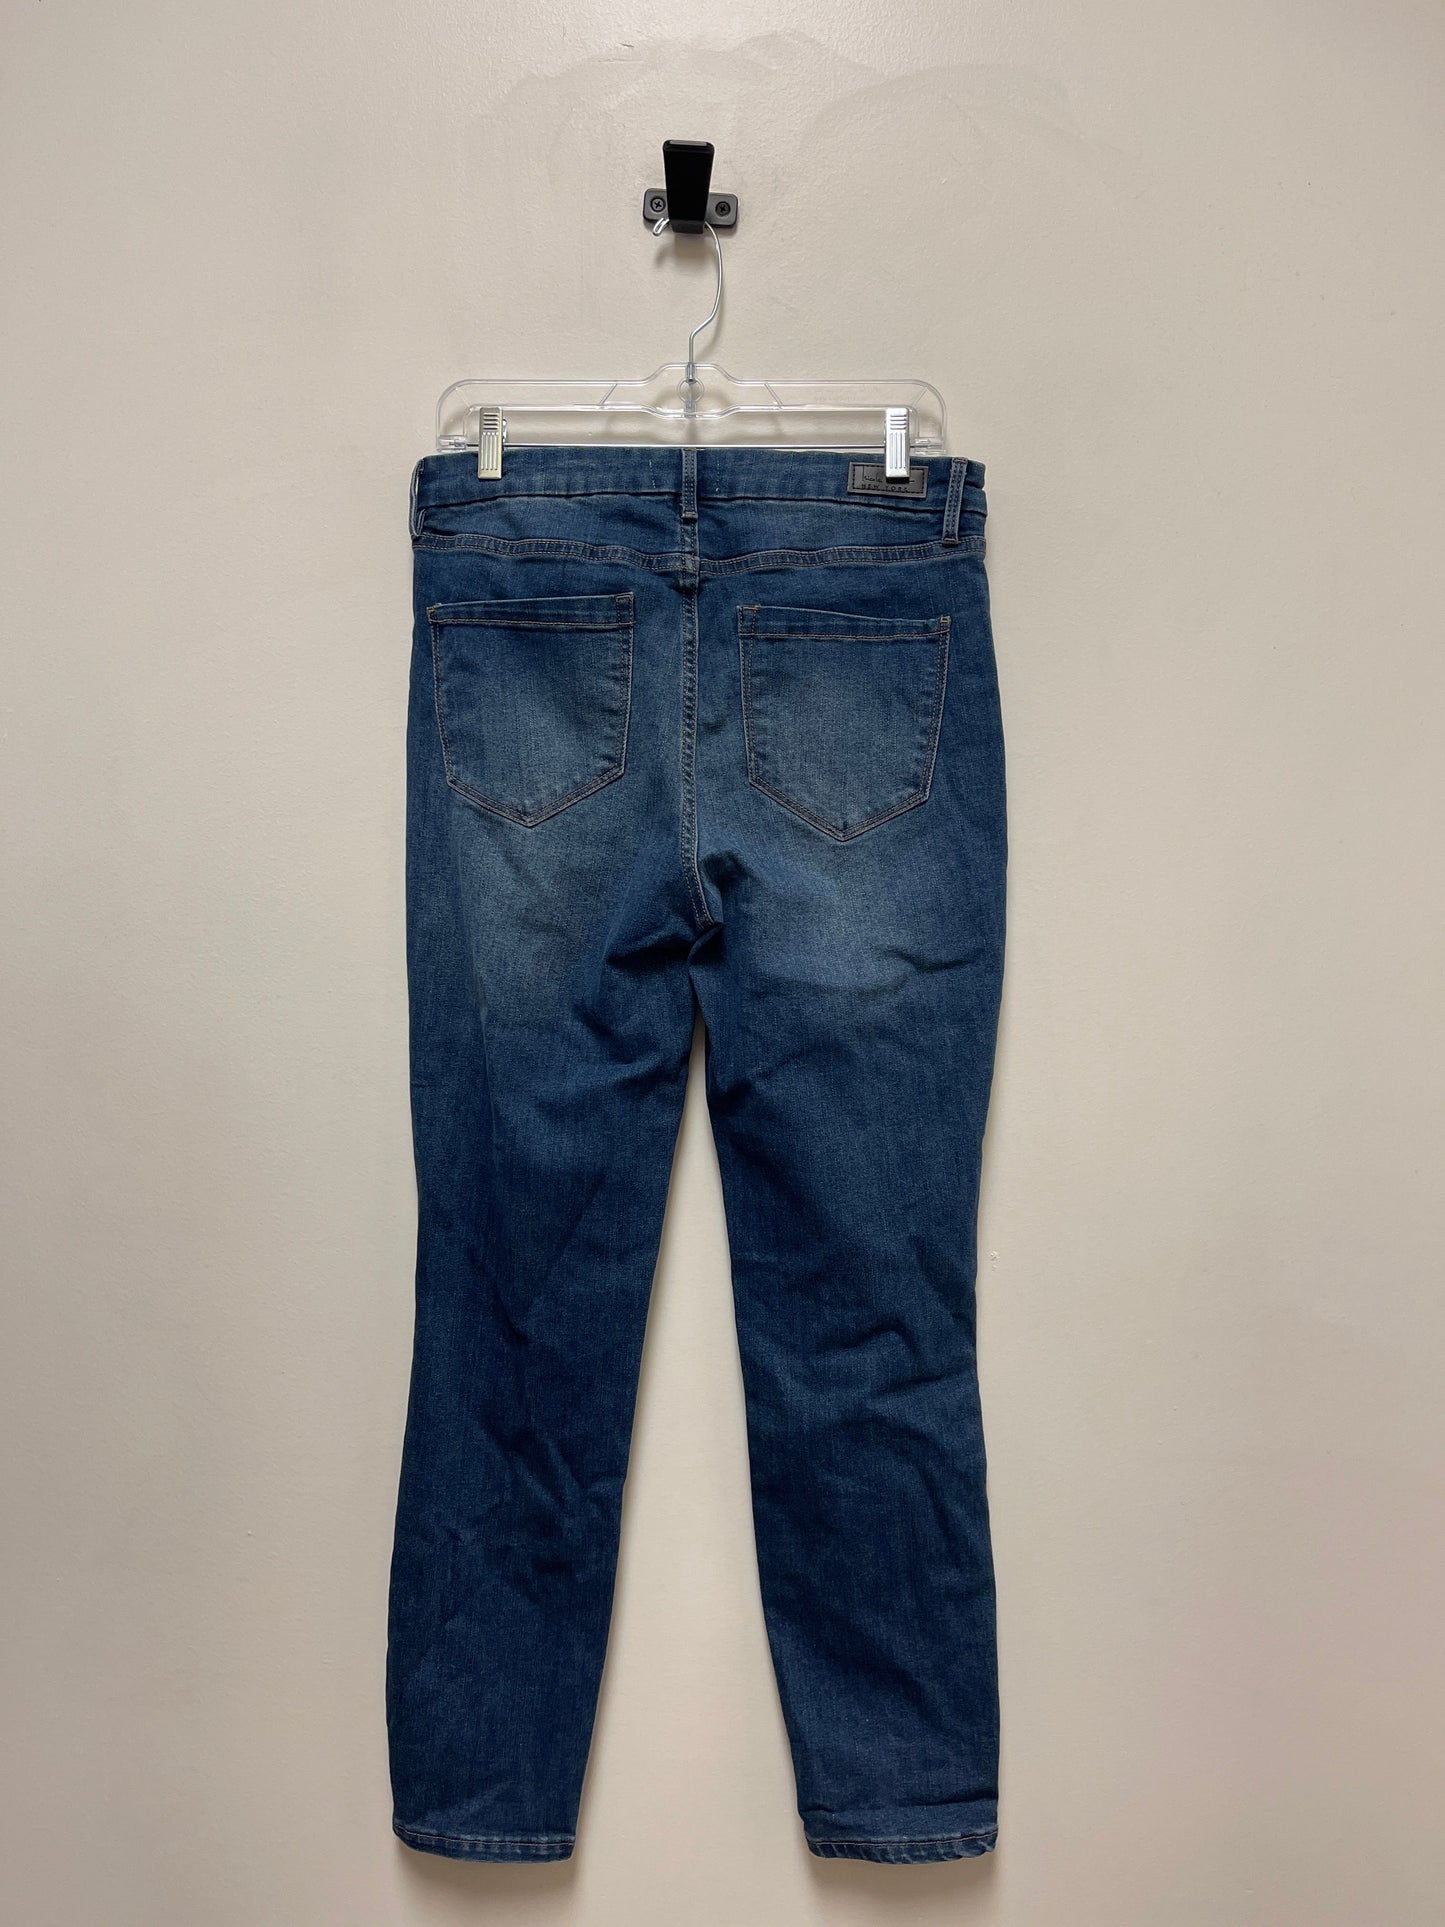 Blue Denim Jeans Skinny Nicole By Nicole Miller, Size 8